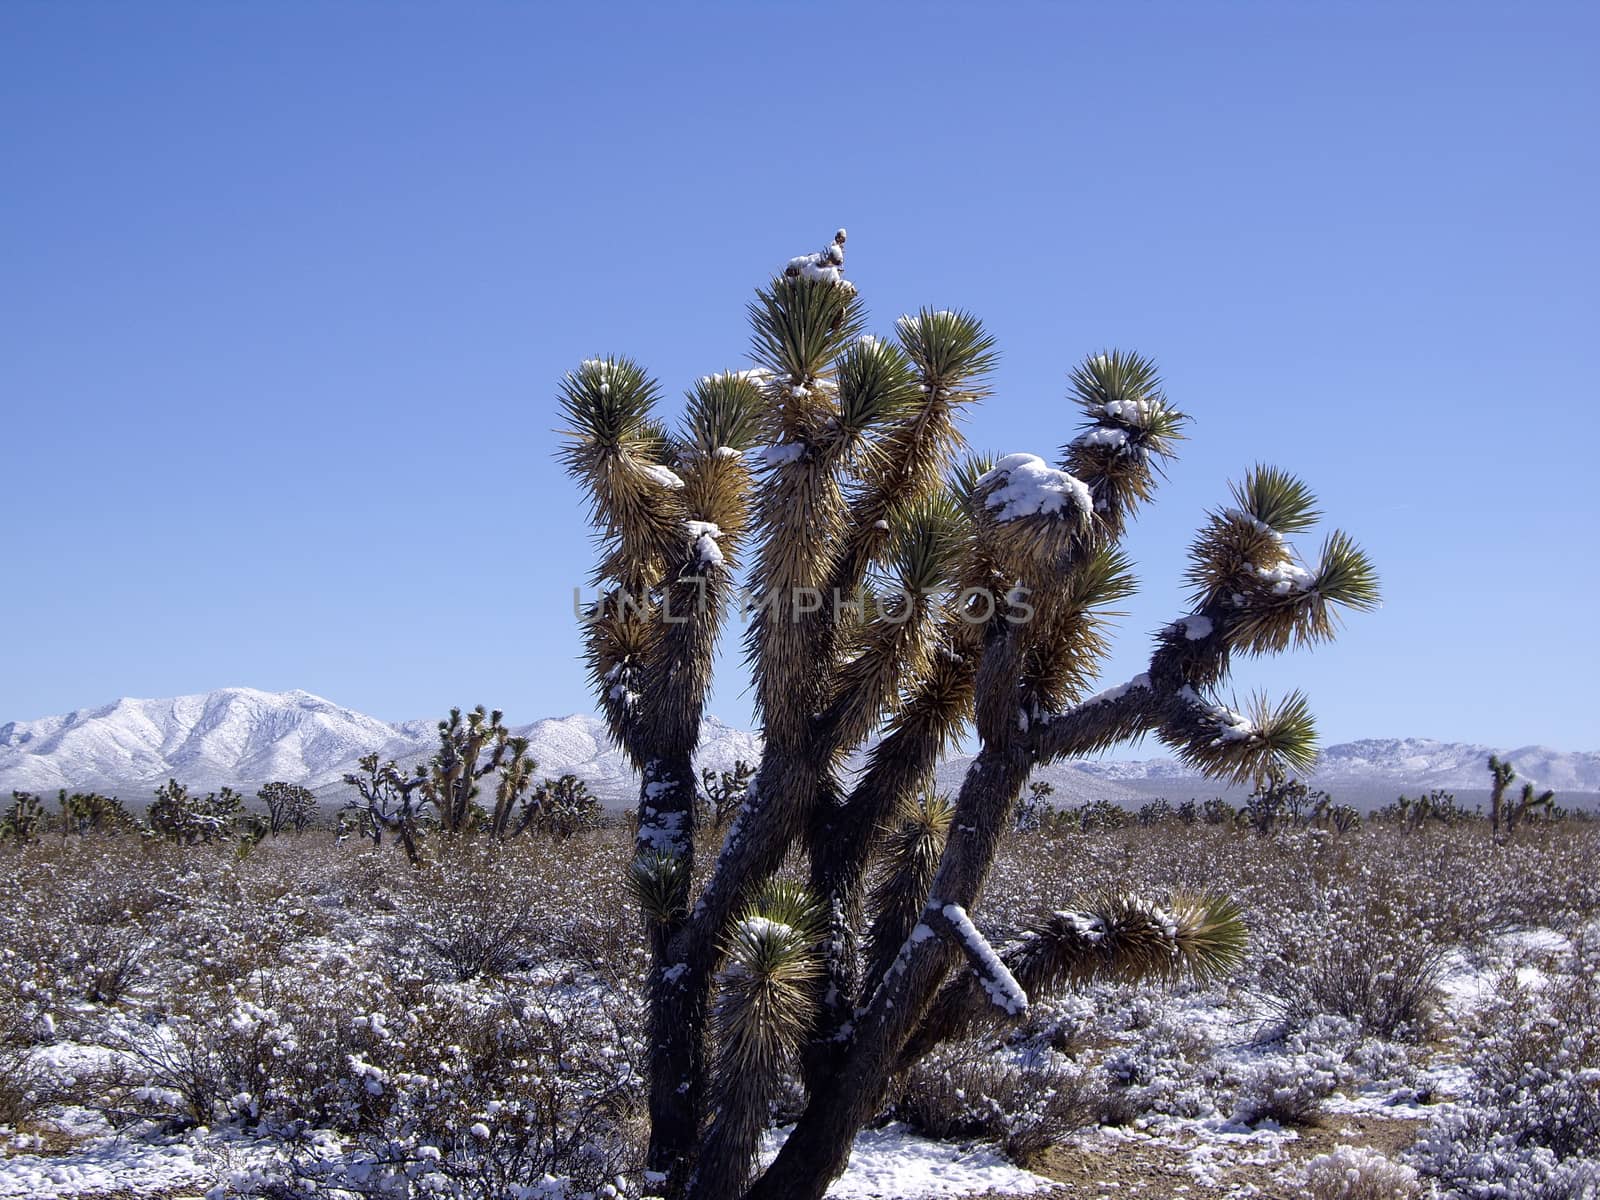 Winter in Mojave Desert Nevada by emattil